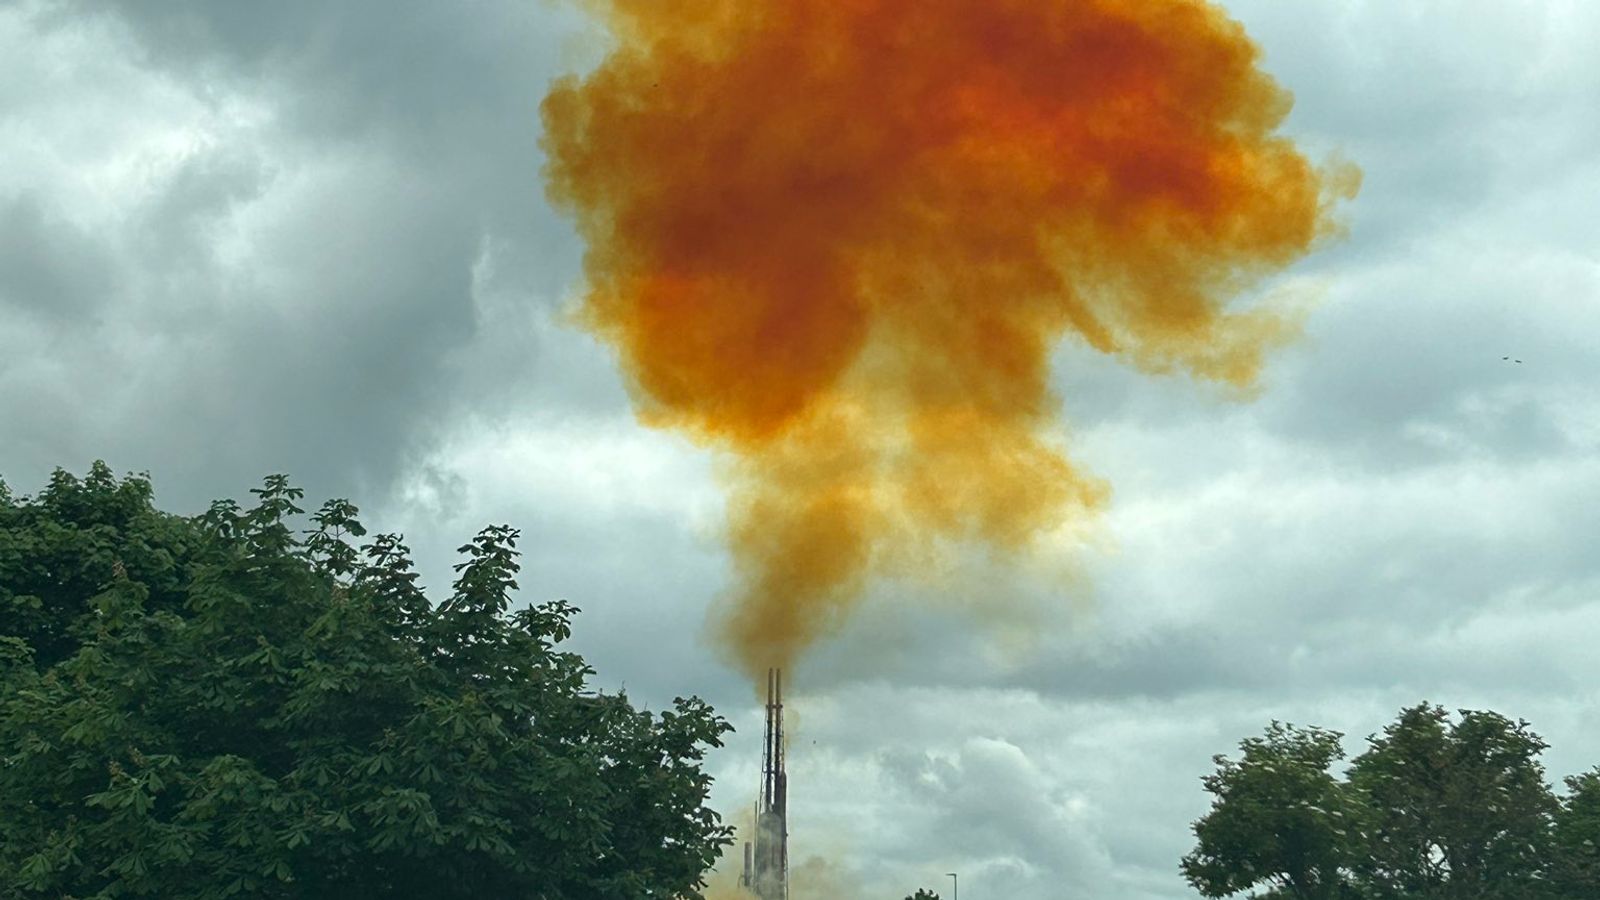 Orange cloud seen above County Durham after 'industrial incident'